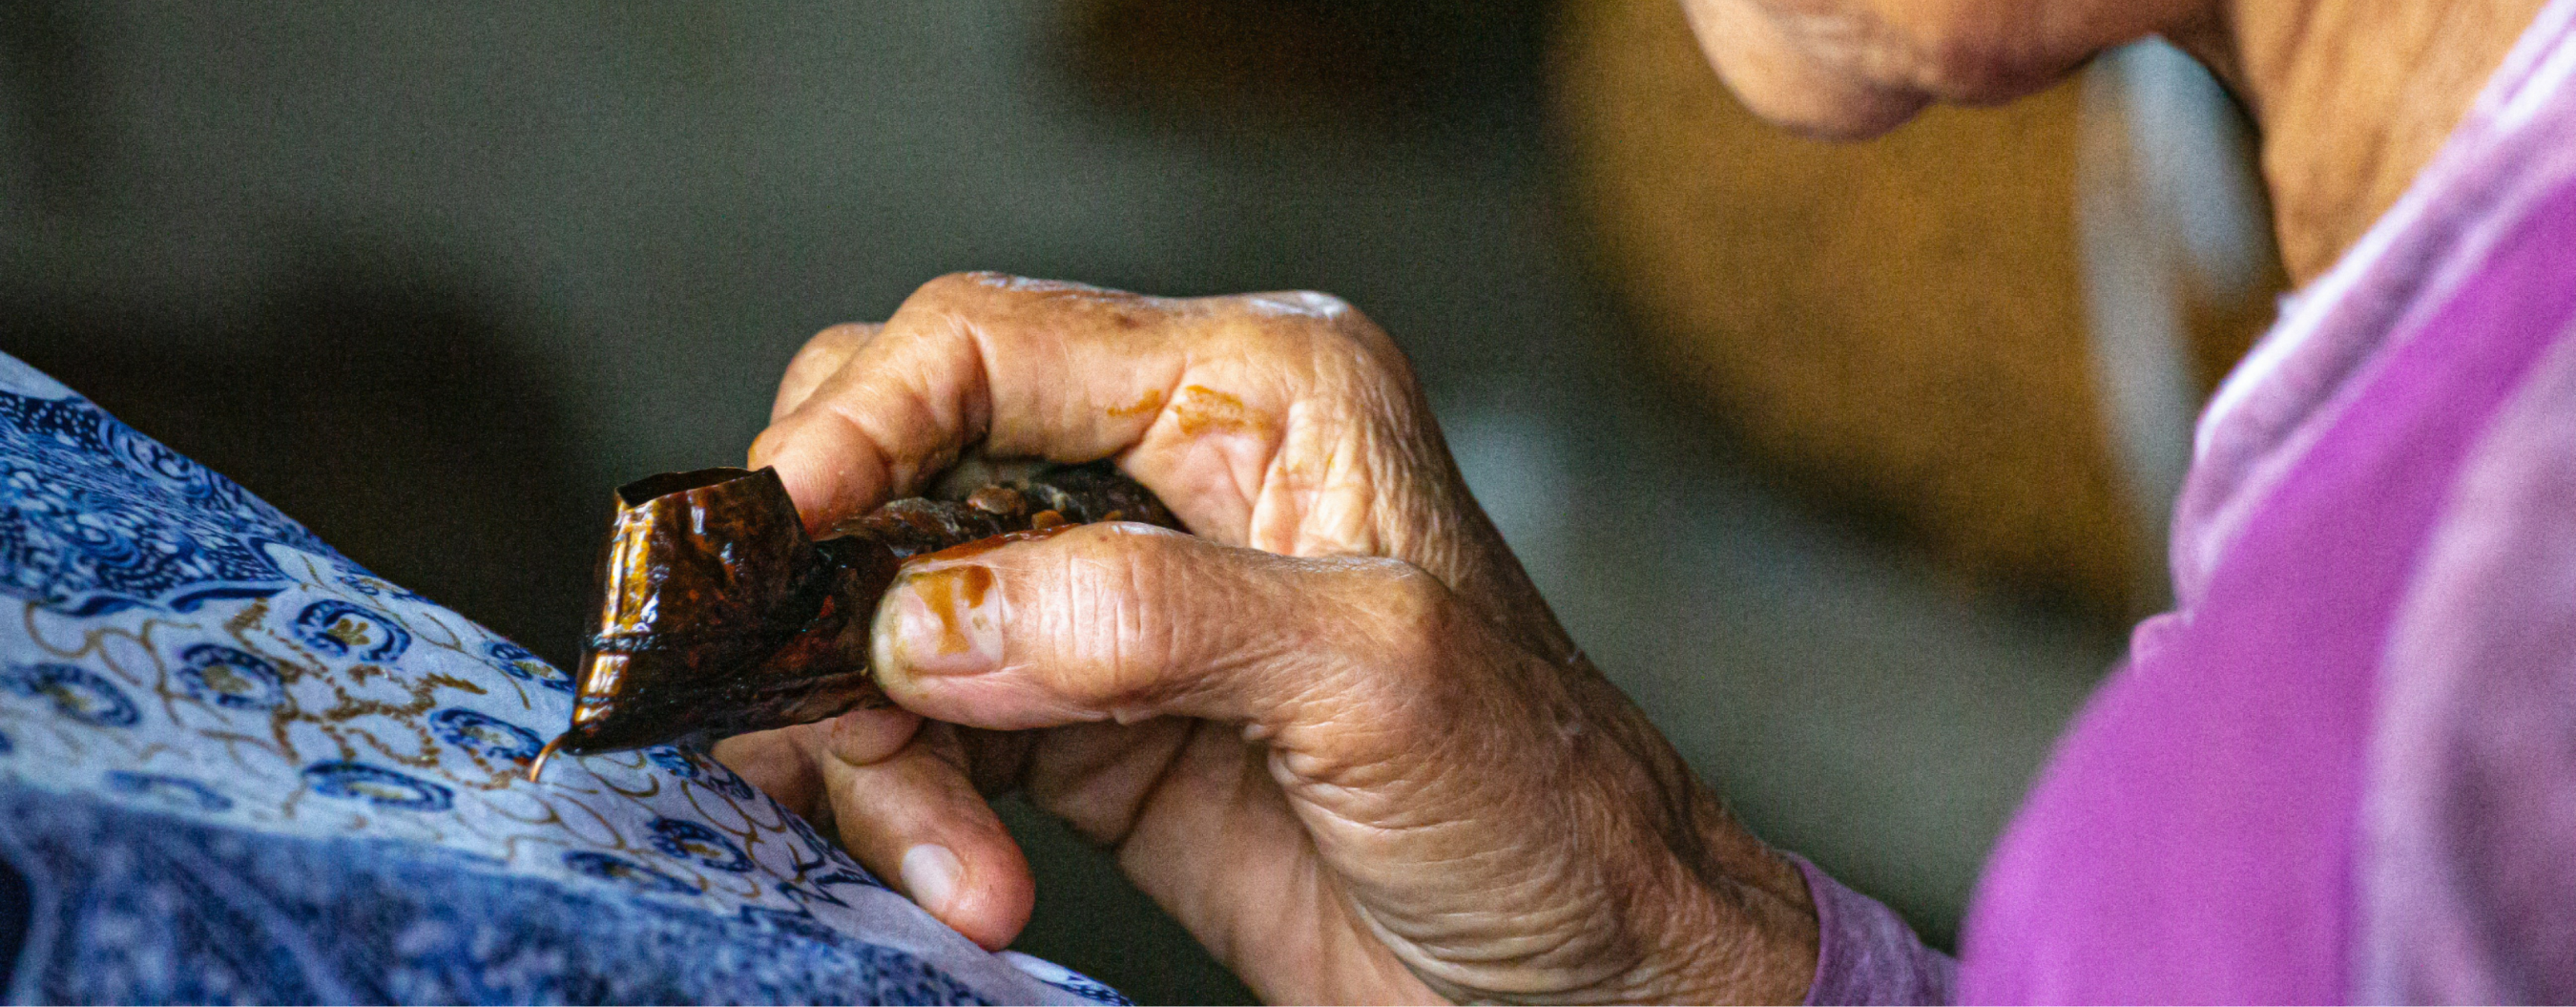 "Weaving Traditions: The Craftsmen of Indonesian Batik"